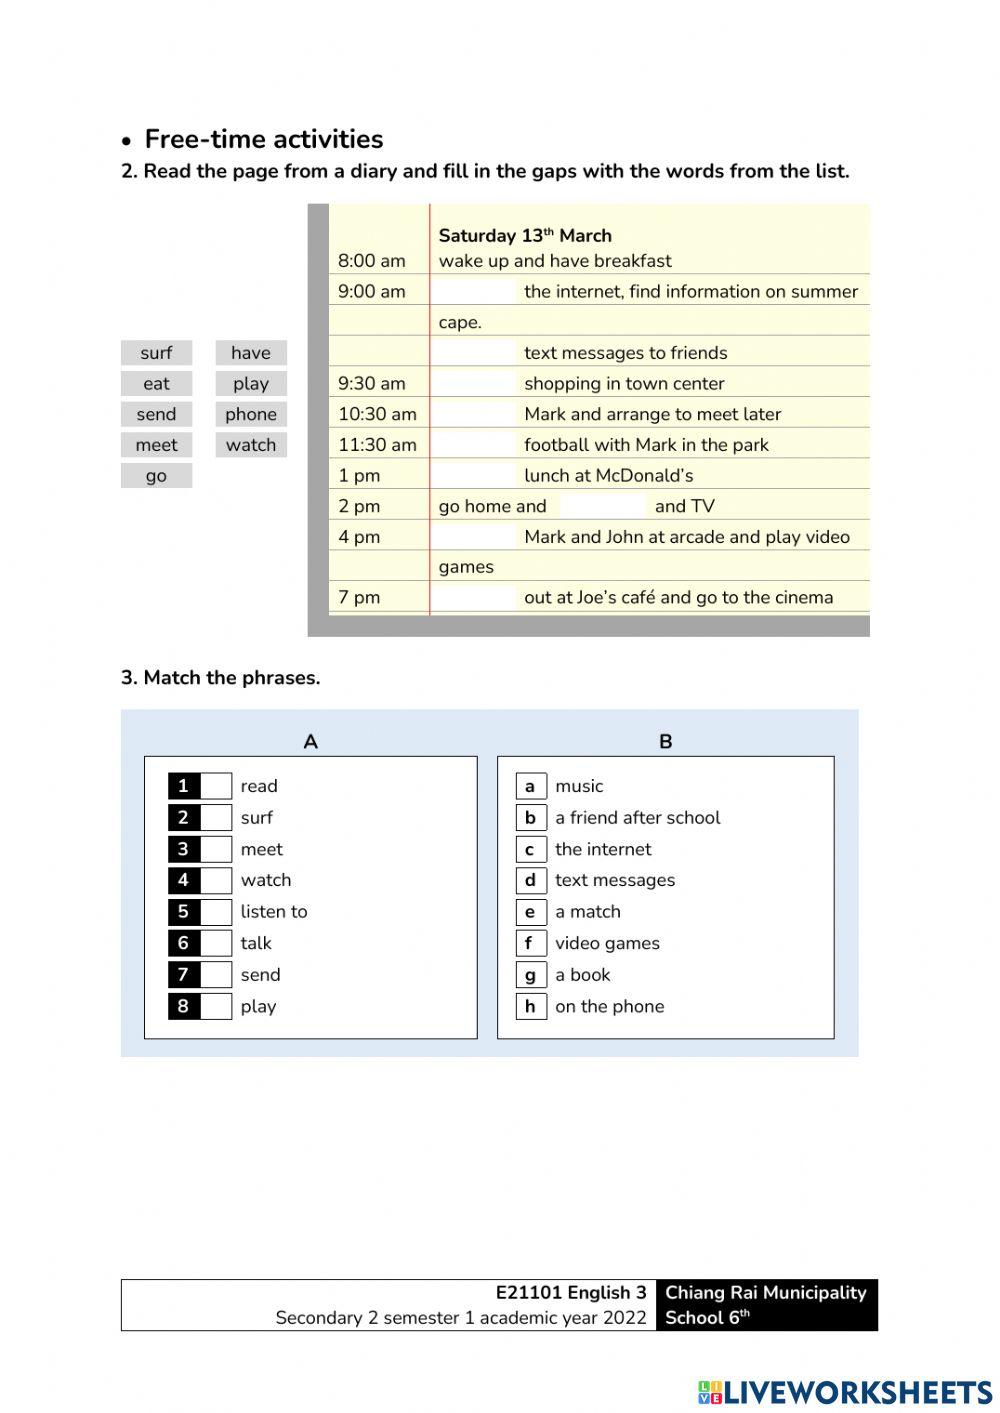 Worksheet 16 Module 4 Sport - chores - free-time activities